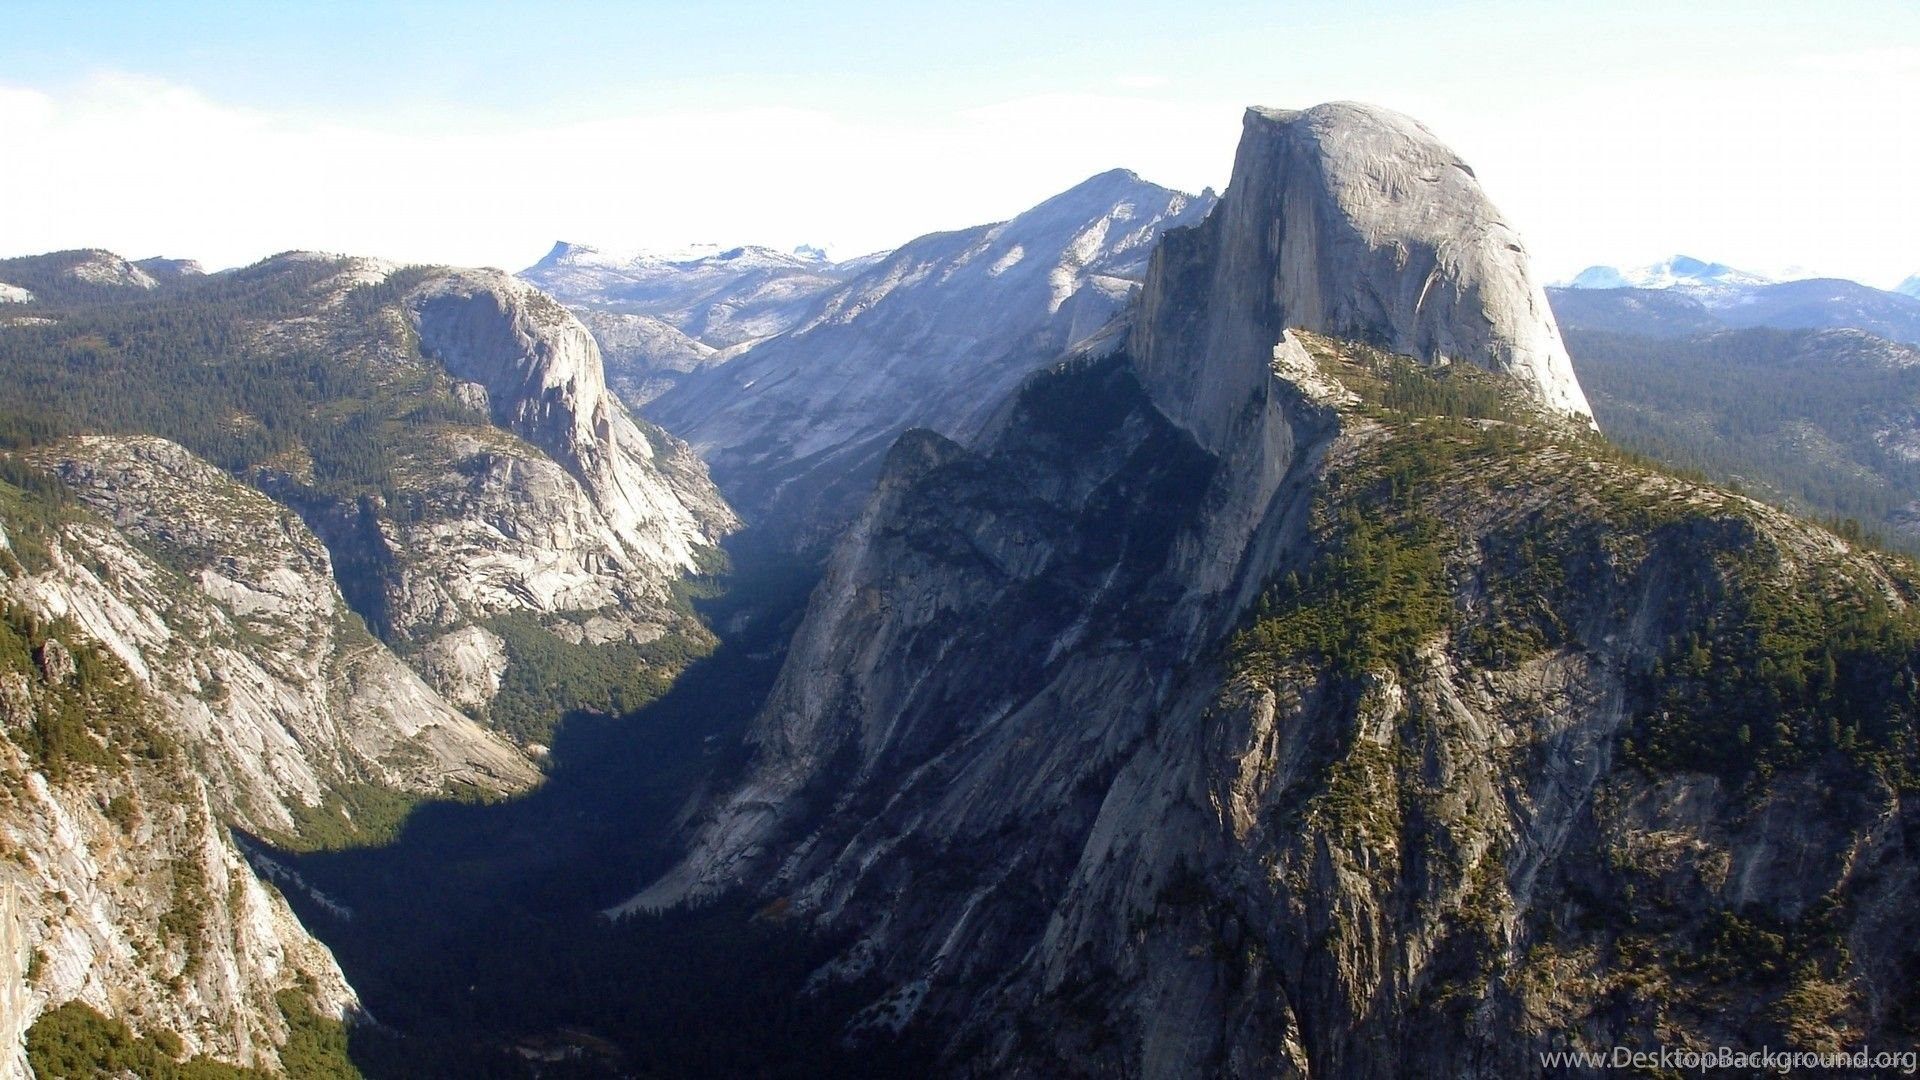 Download 1920x1080 Yosemite National Park Mountains Wallpaper Desktop Background